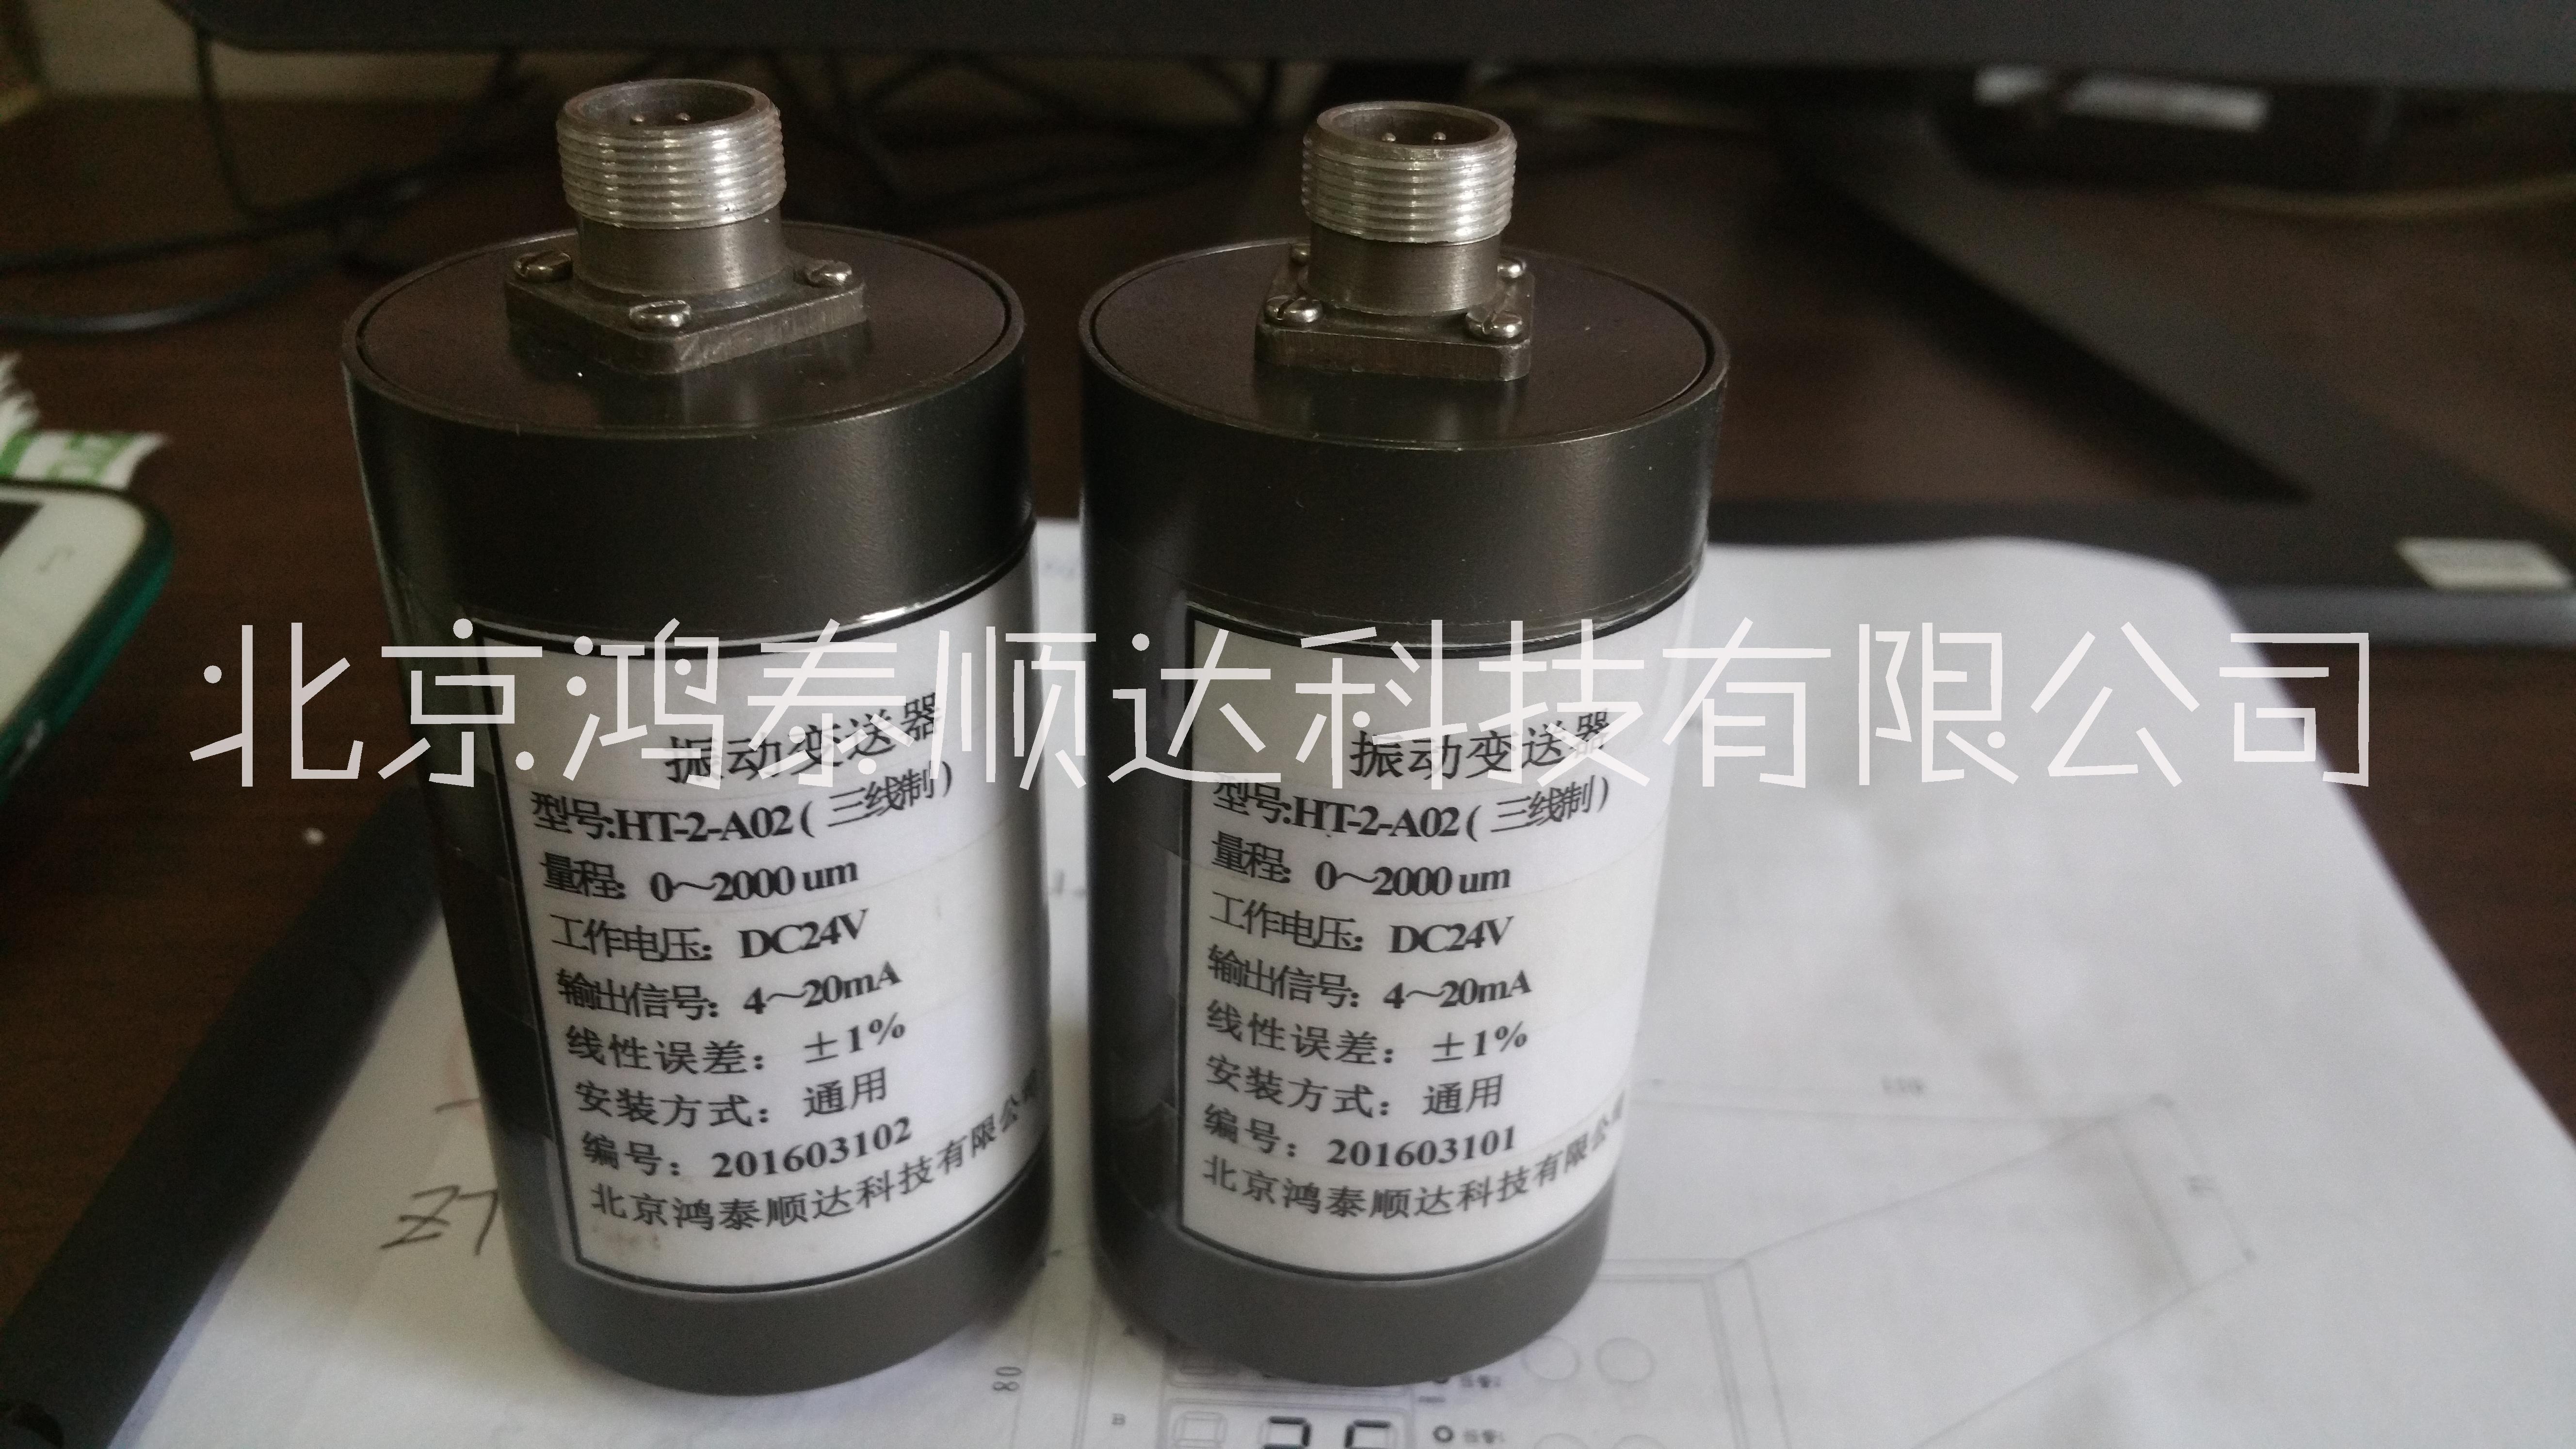 NJVS5403振动加速度/速度传感器北京生产厂家信息；NJVS5403振动加速度/速度传感器市场价格信息